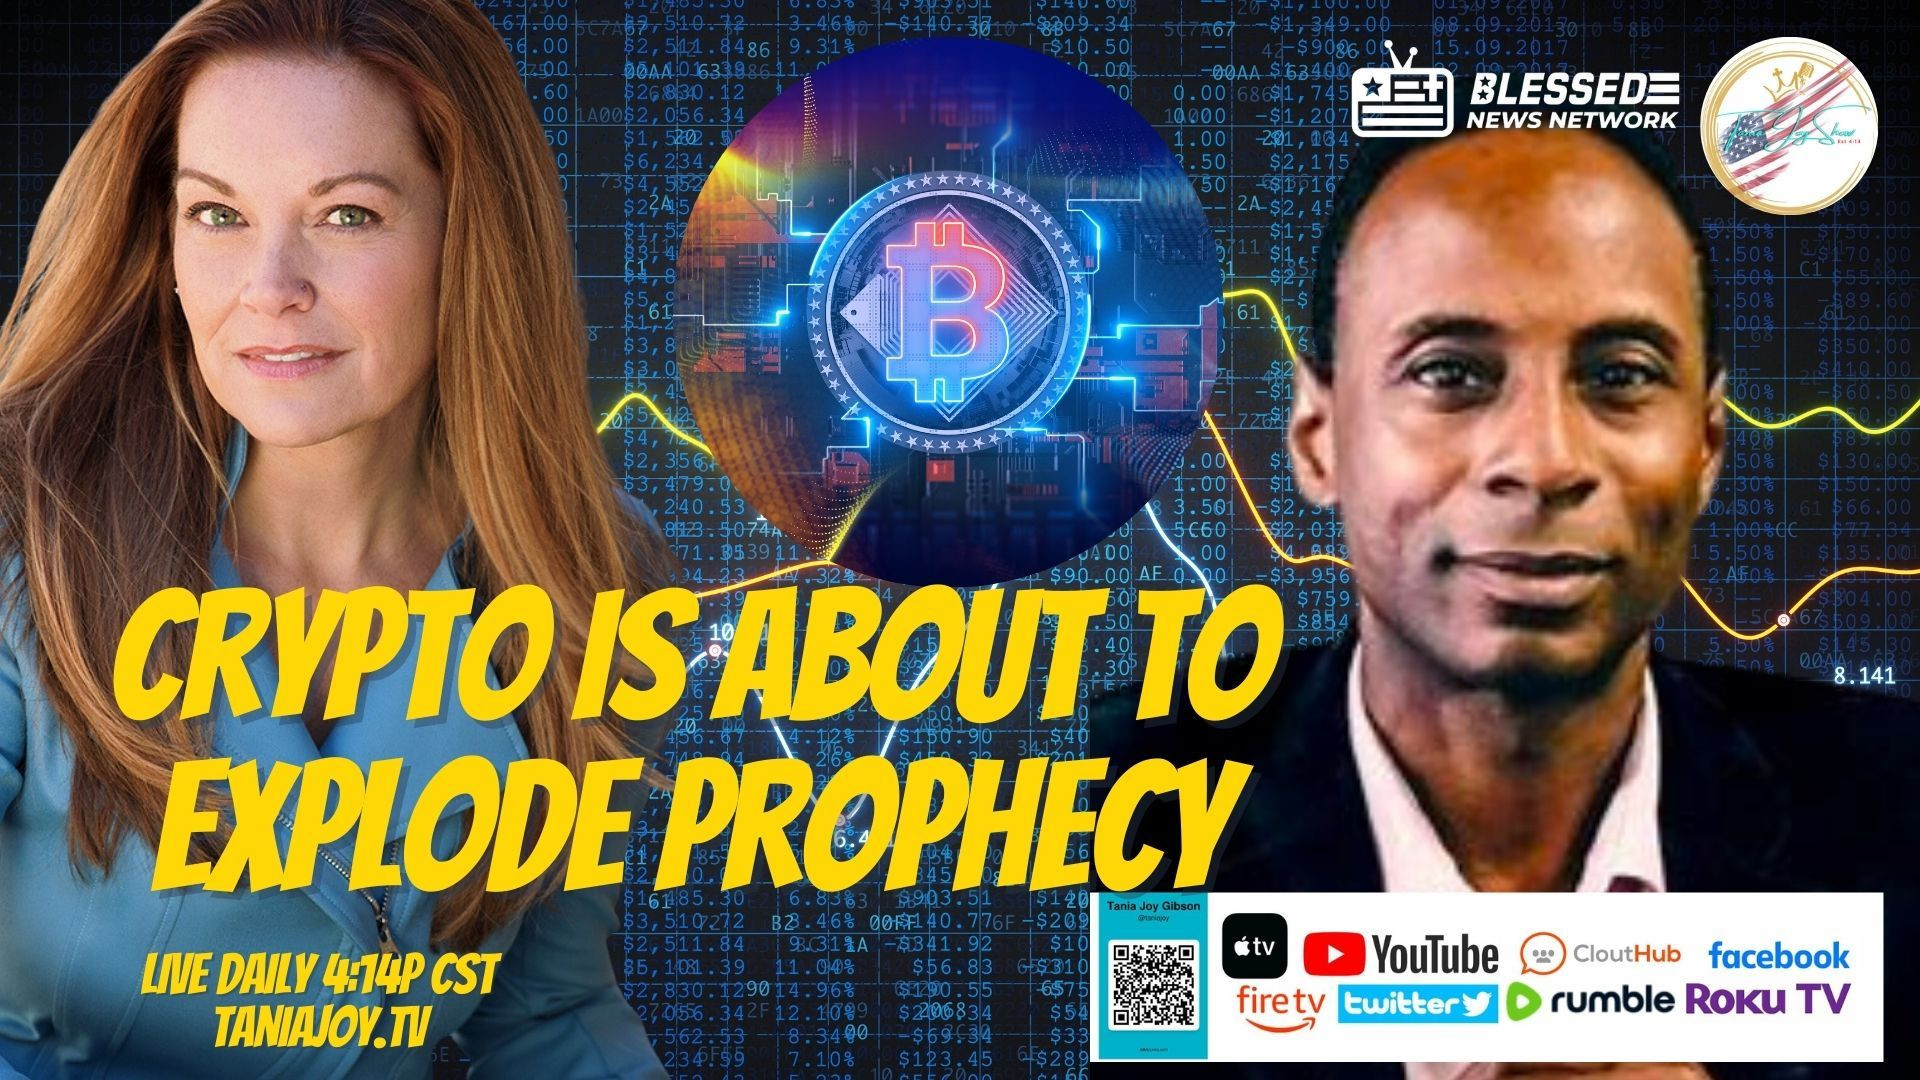 The Tania Joy Show | Crypto Prophecy - GET READY FOR FINANCIAL BREAKTHROUGH | Manuel Johnson